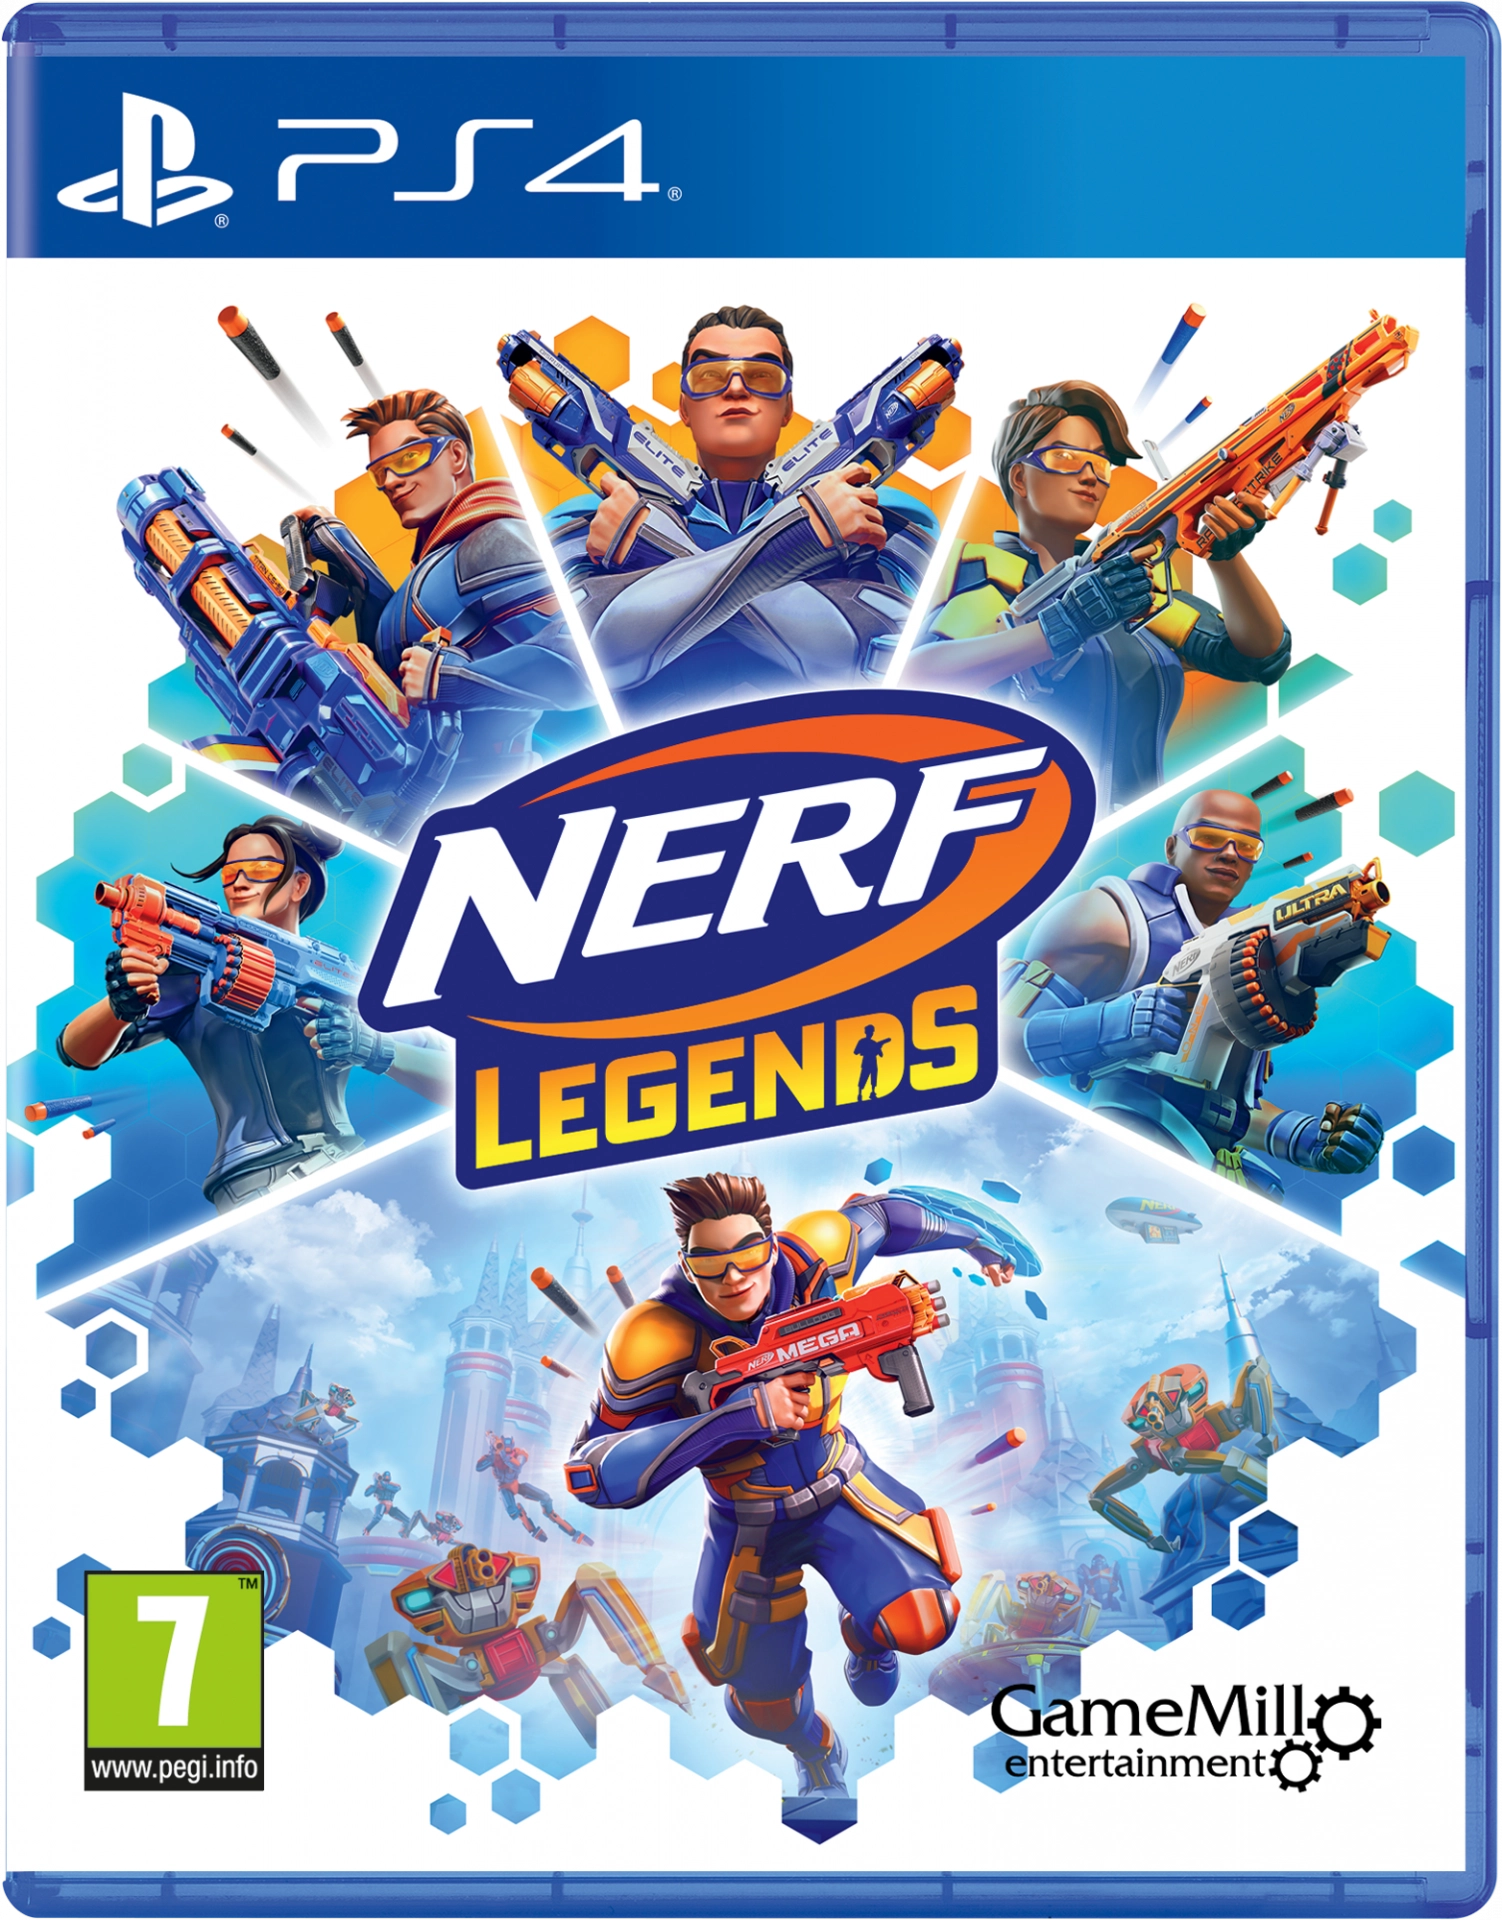 NERF Legends (PS4), GameMill Entertainment